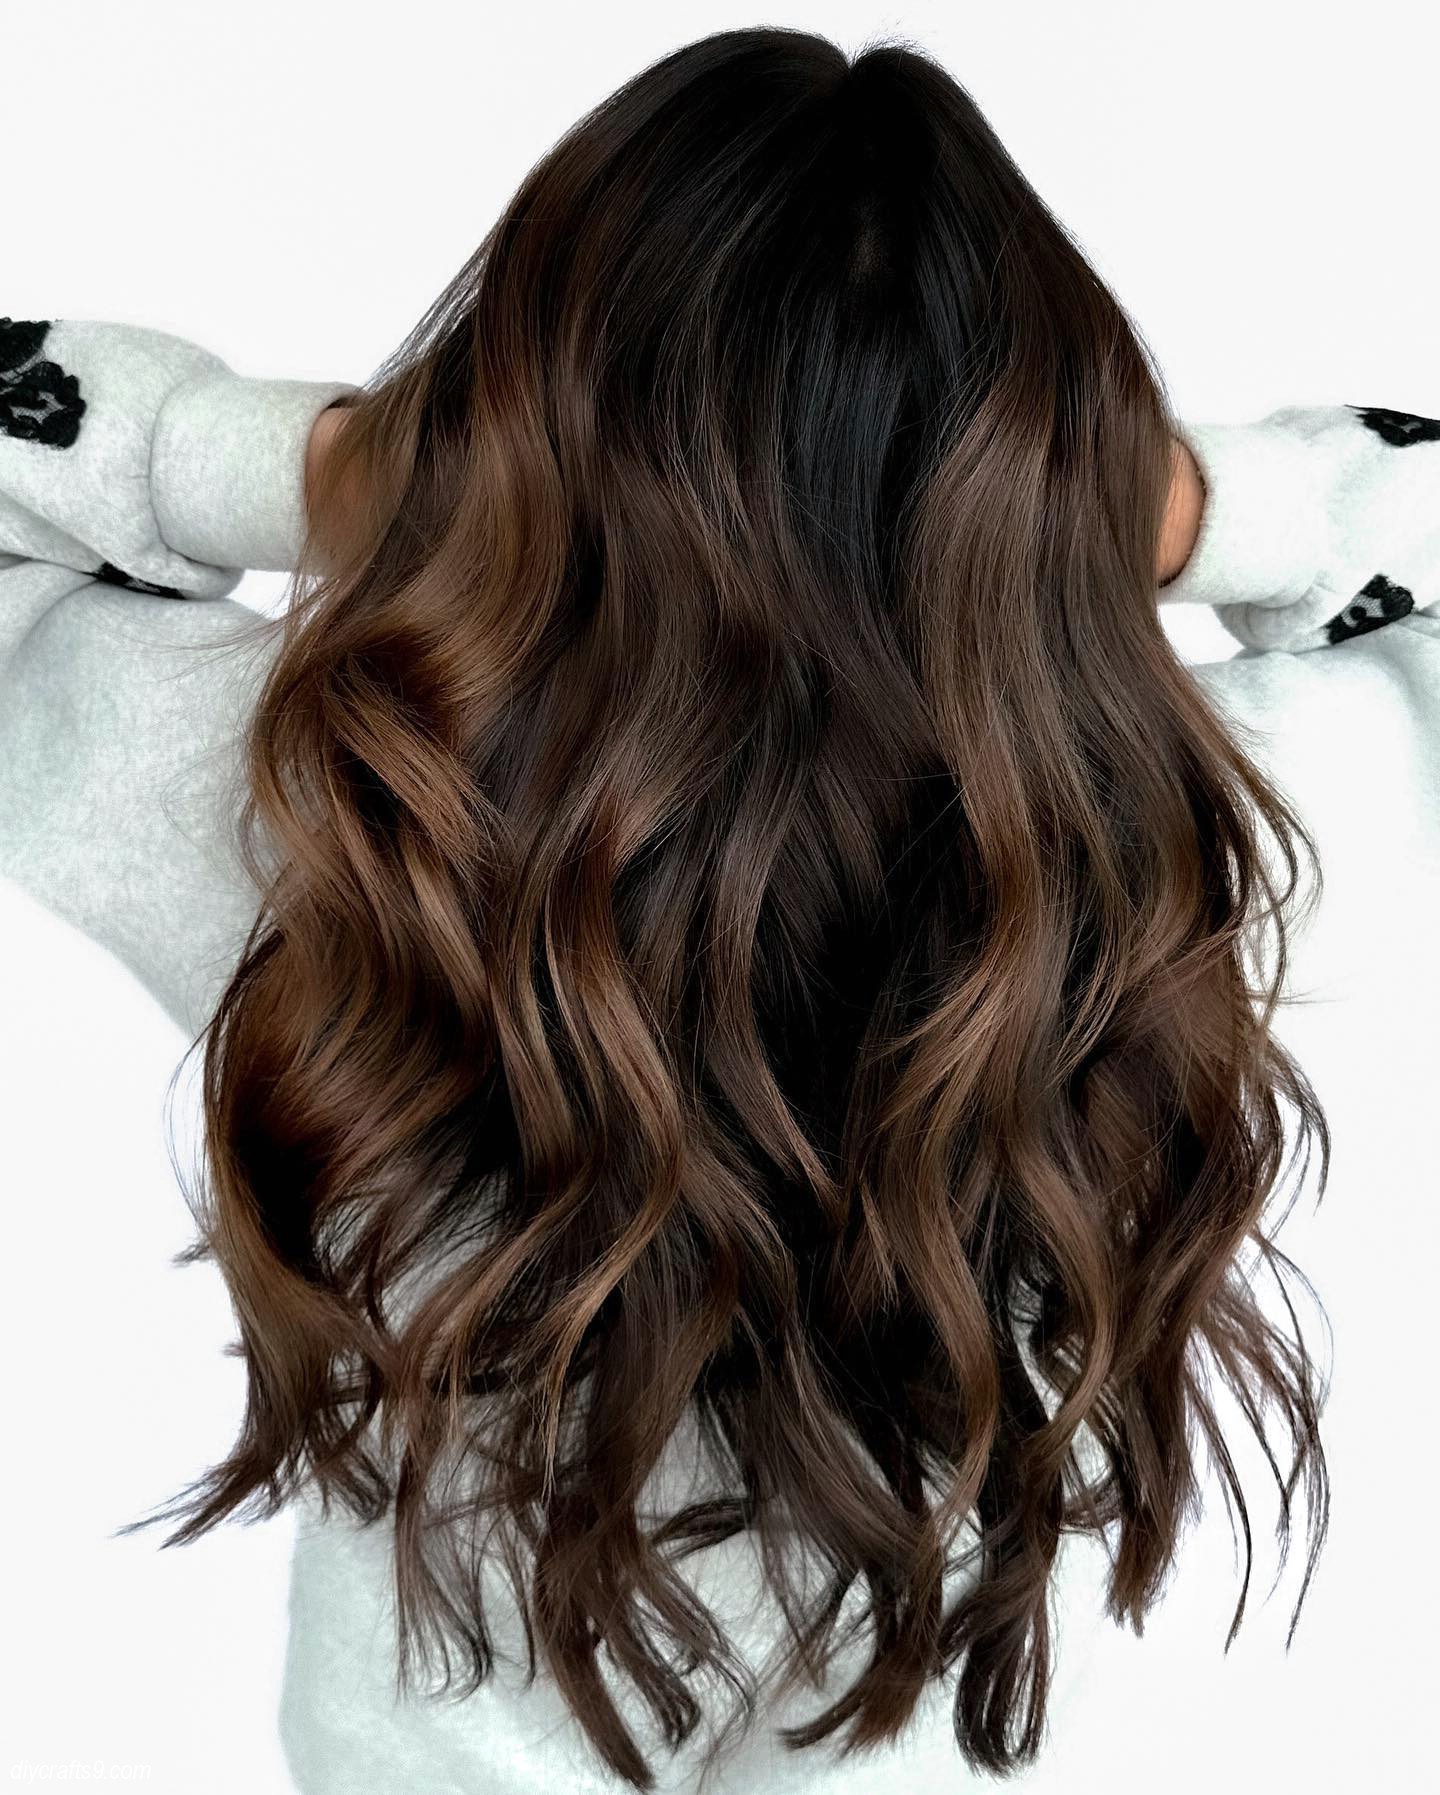 Wavy Hair With Caramel Highlights